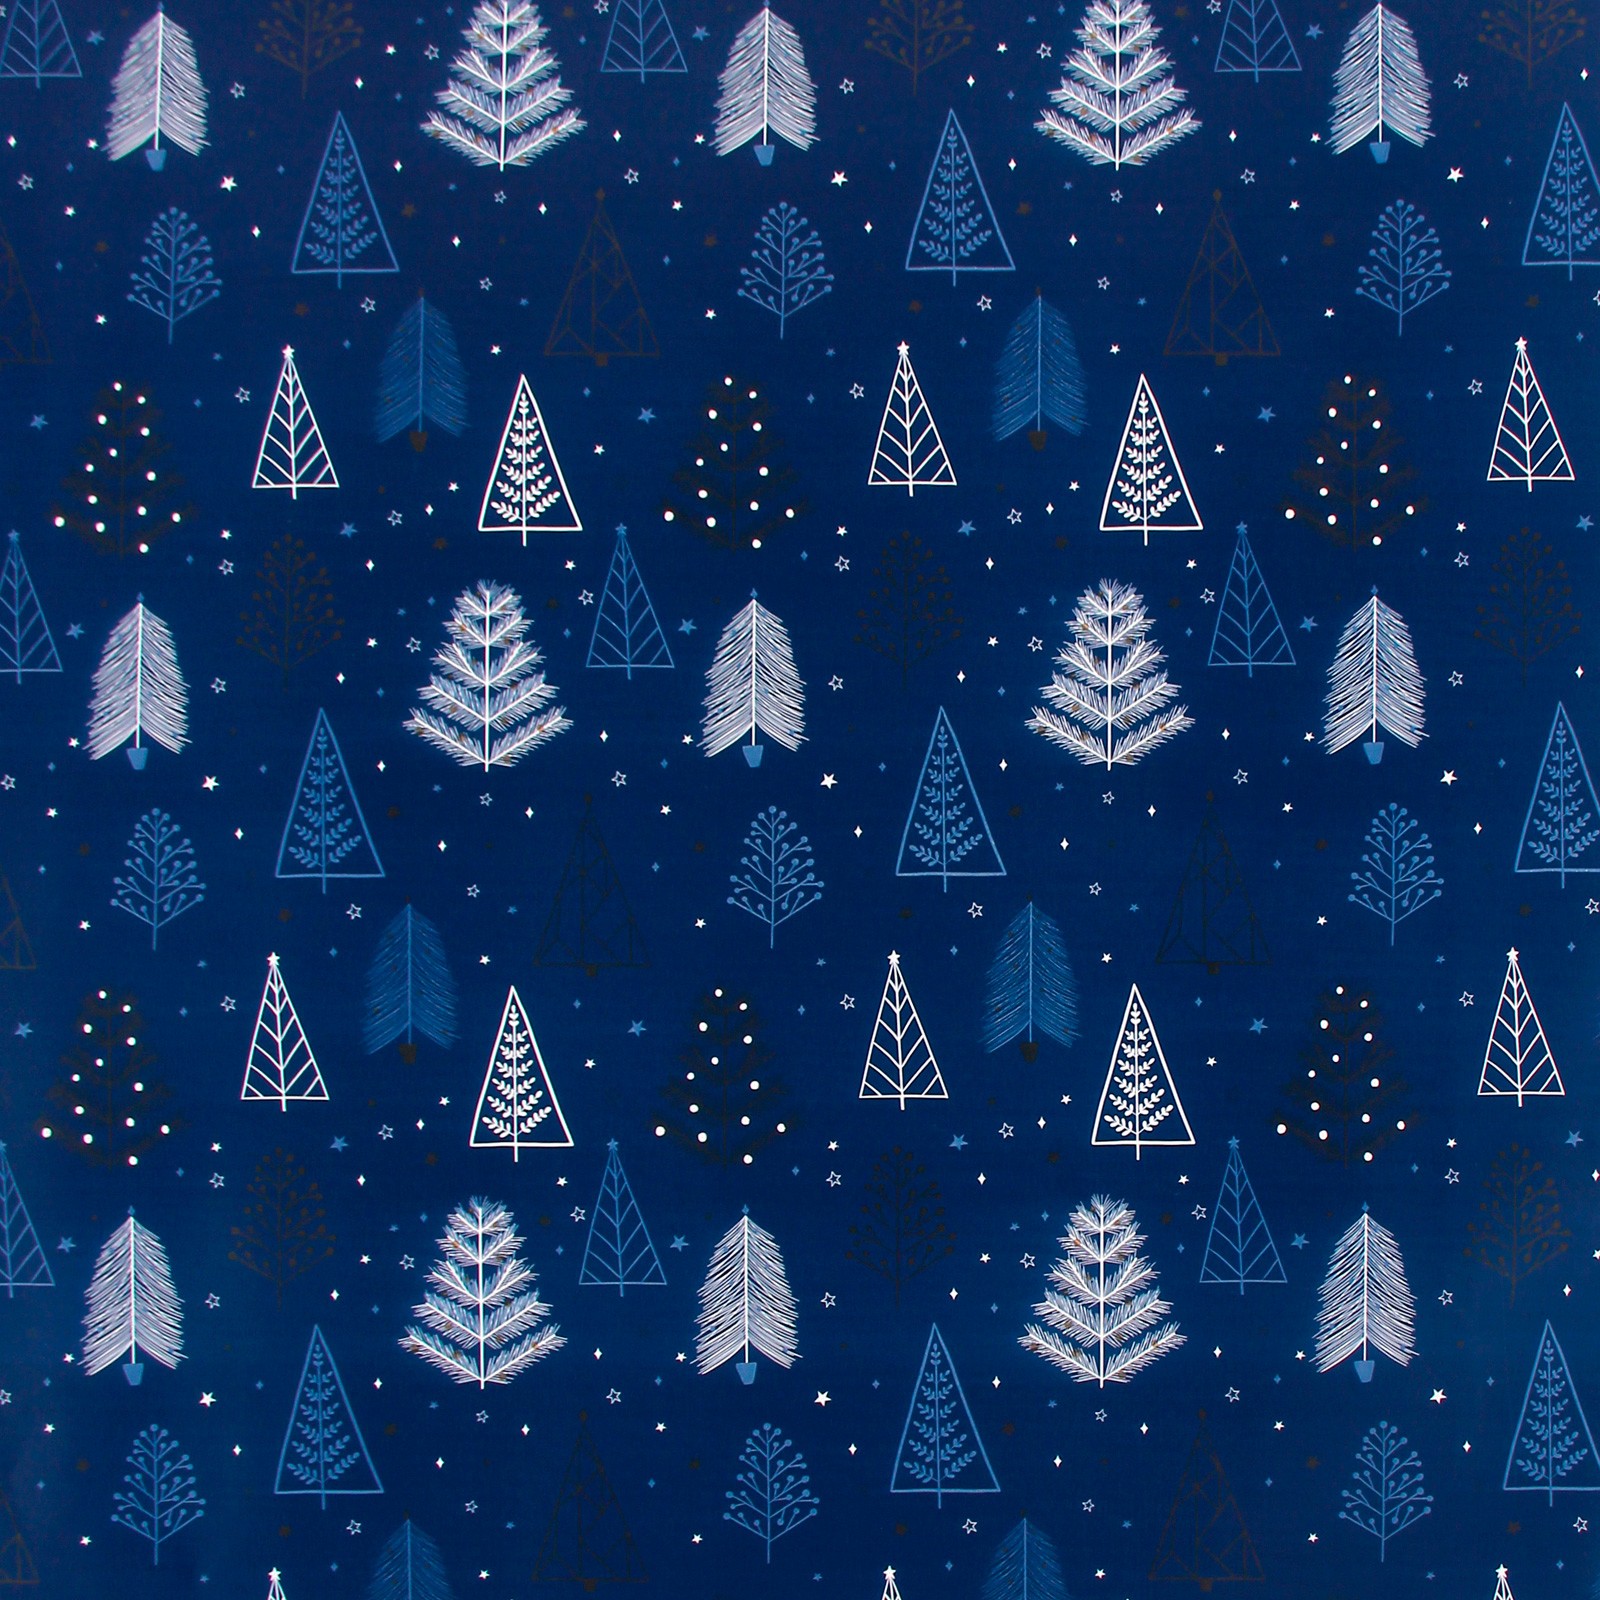 Julegavepapir L:150m B:70cm mørkeblå m/juletræer